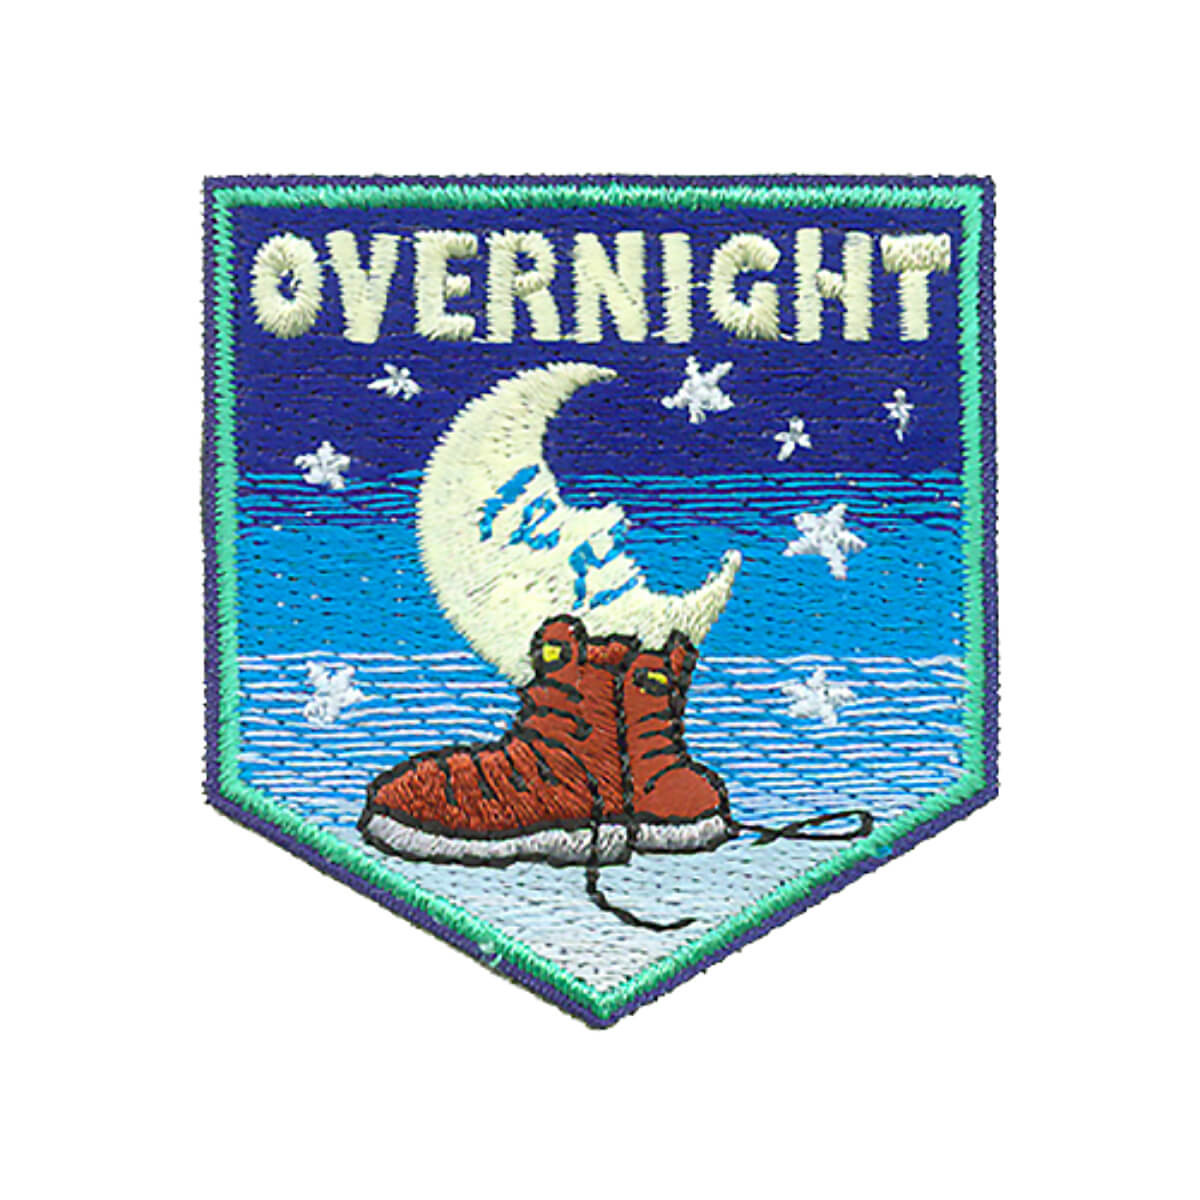 Overnight - W